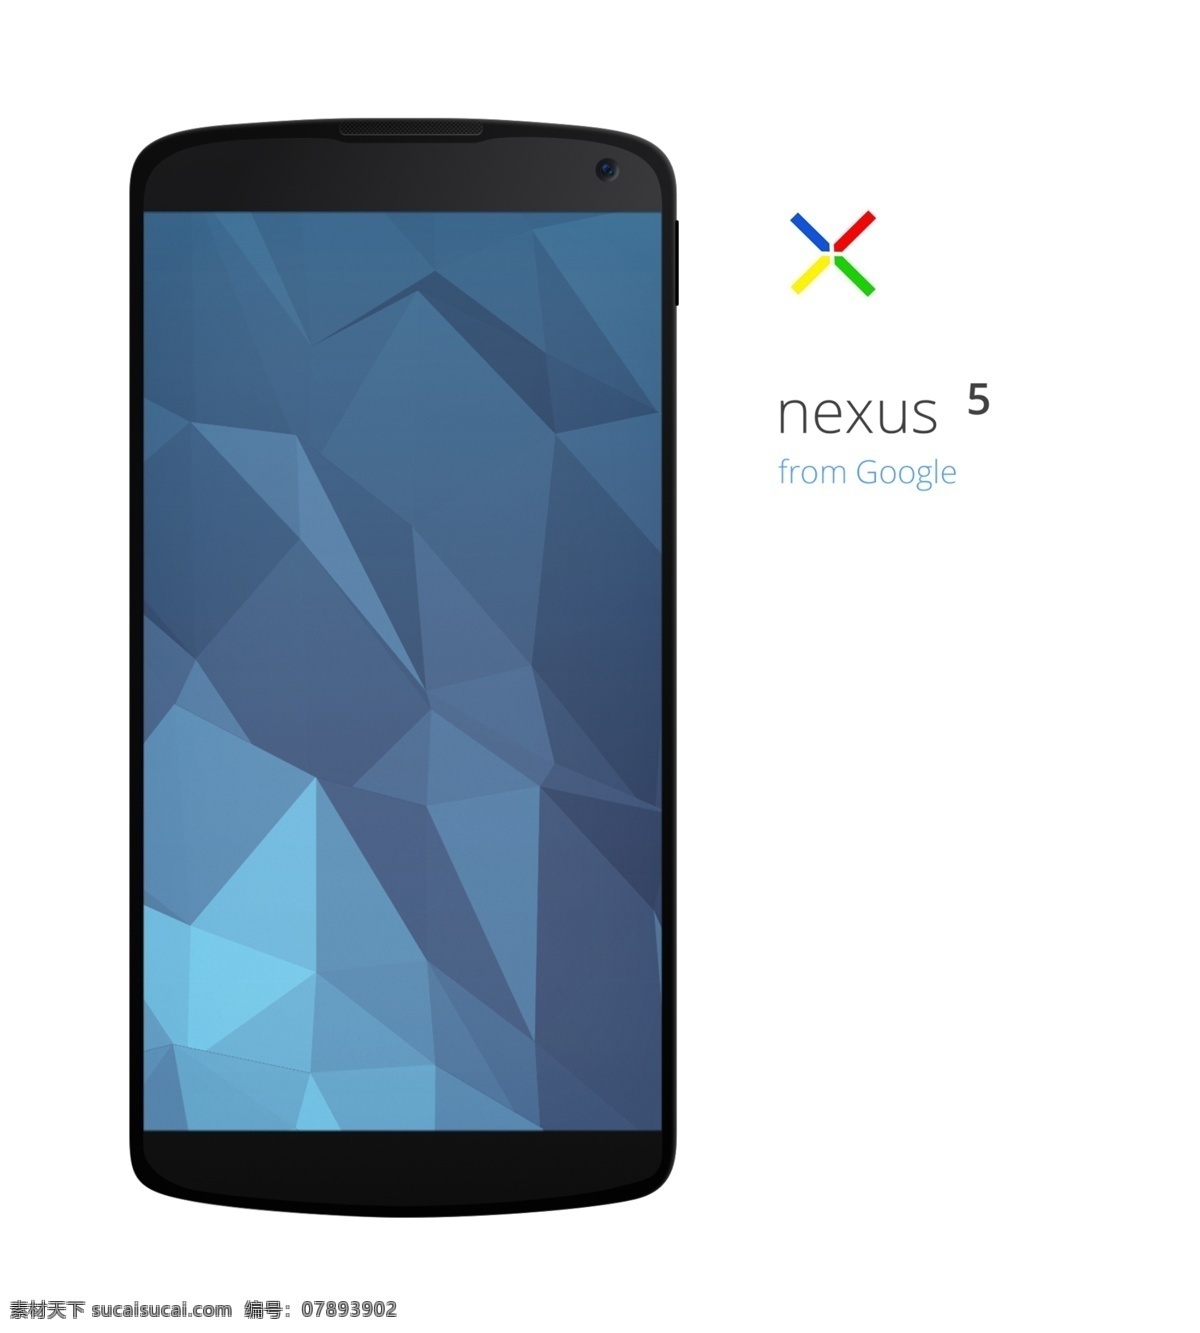 nexus5 界面 分层 手机模型 手机系统 高清摄像头 白色